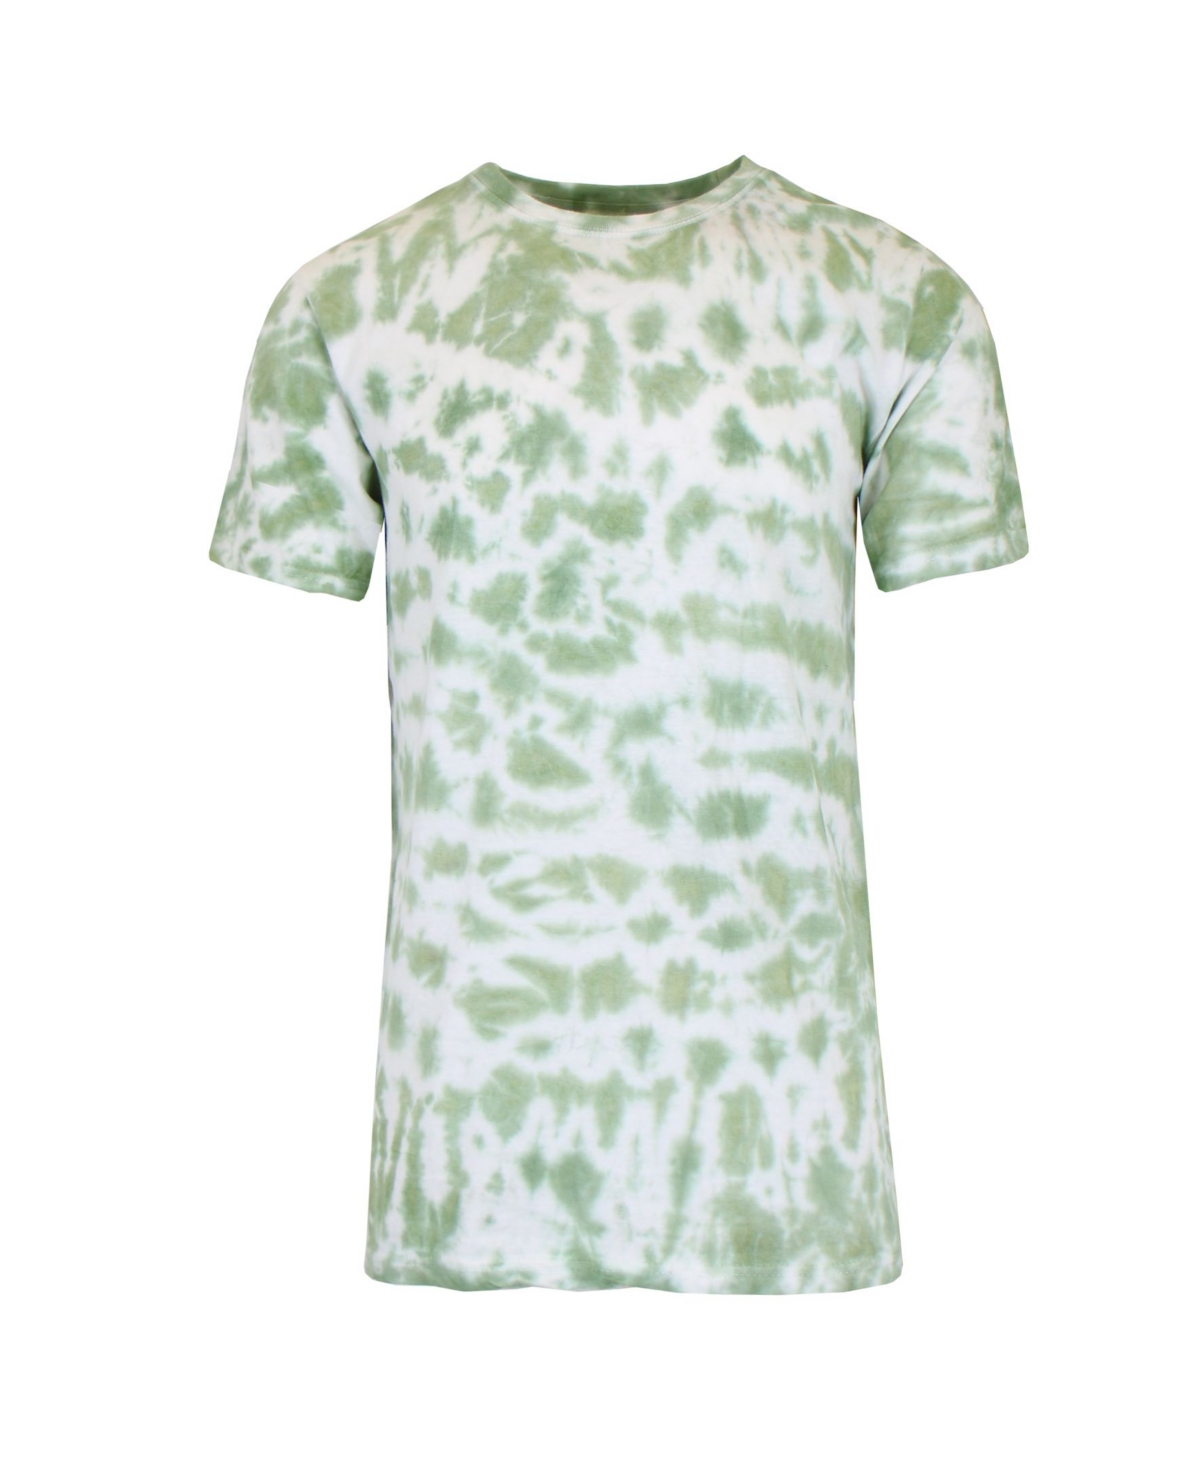 Galaxy By Harvic Men's Short Sleeve Tie-Dye Printed T-shirt